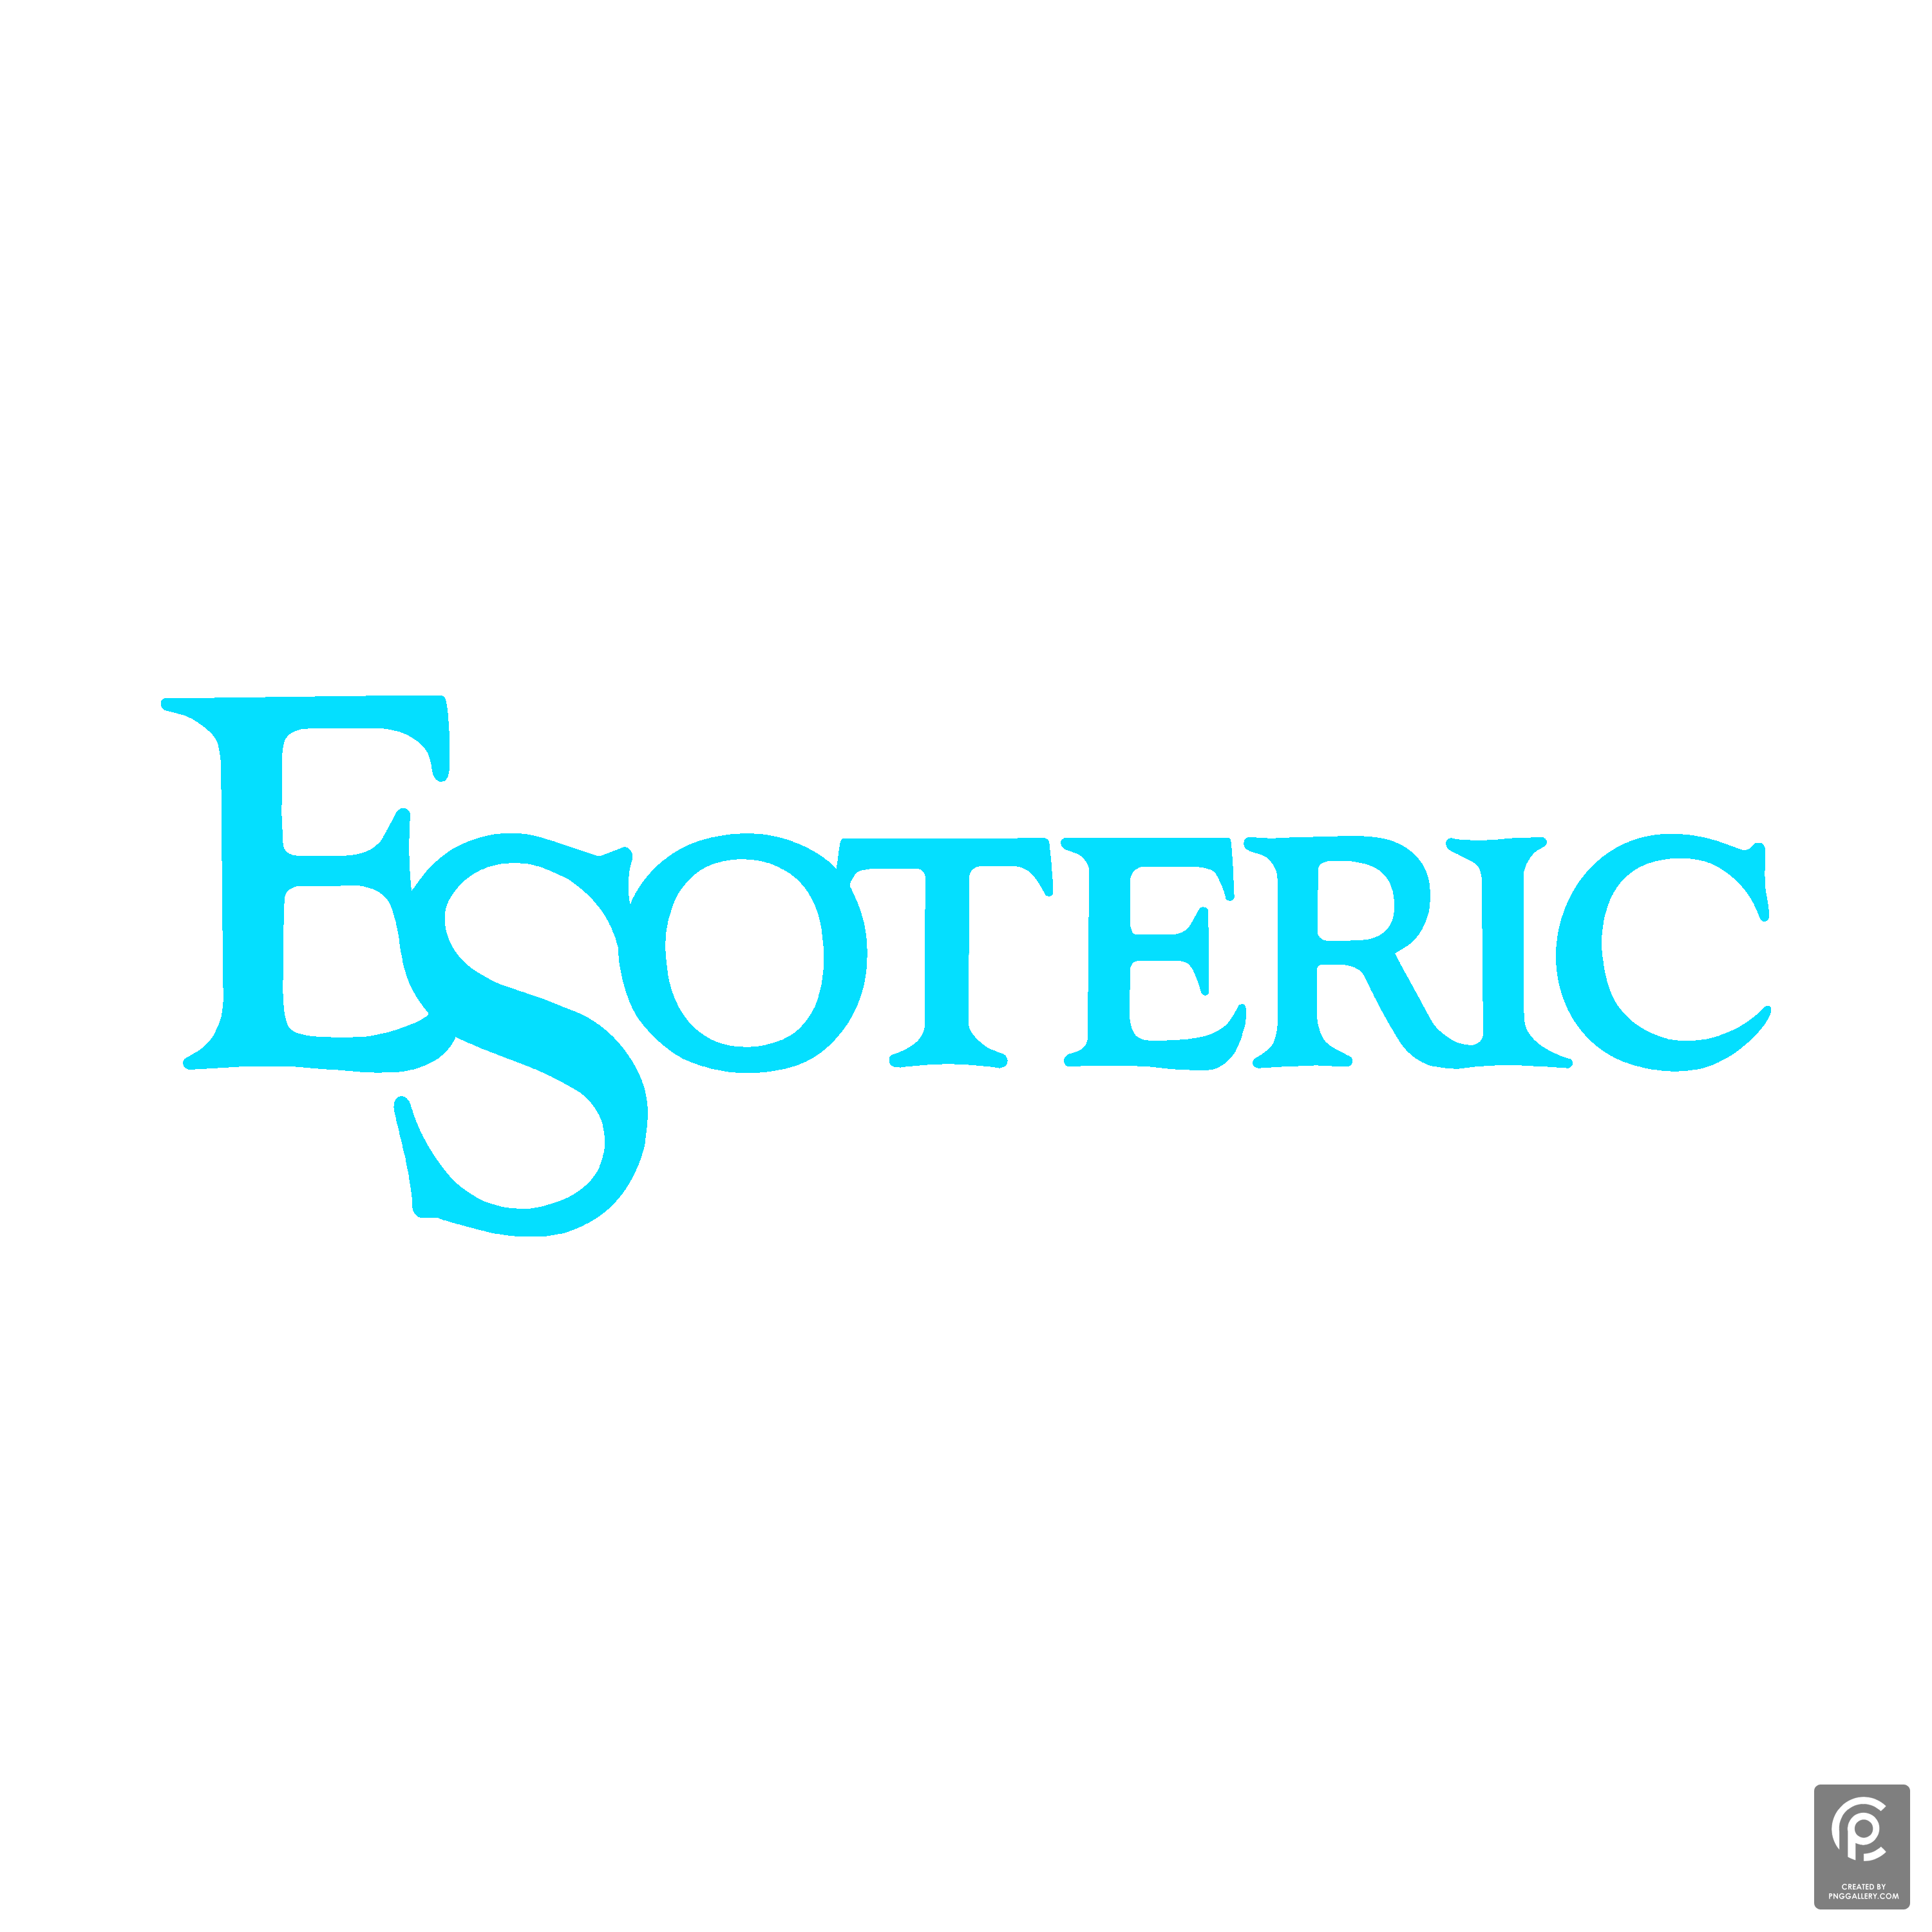 Esoteric Logo Transparent Gallery